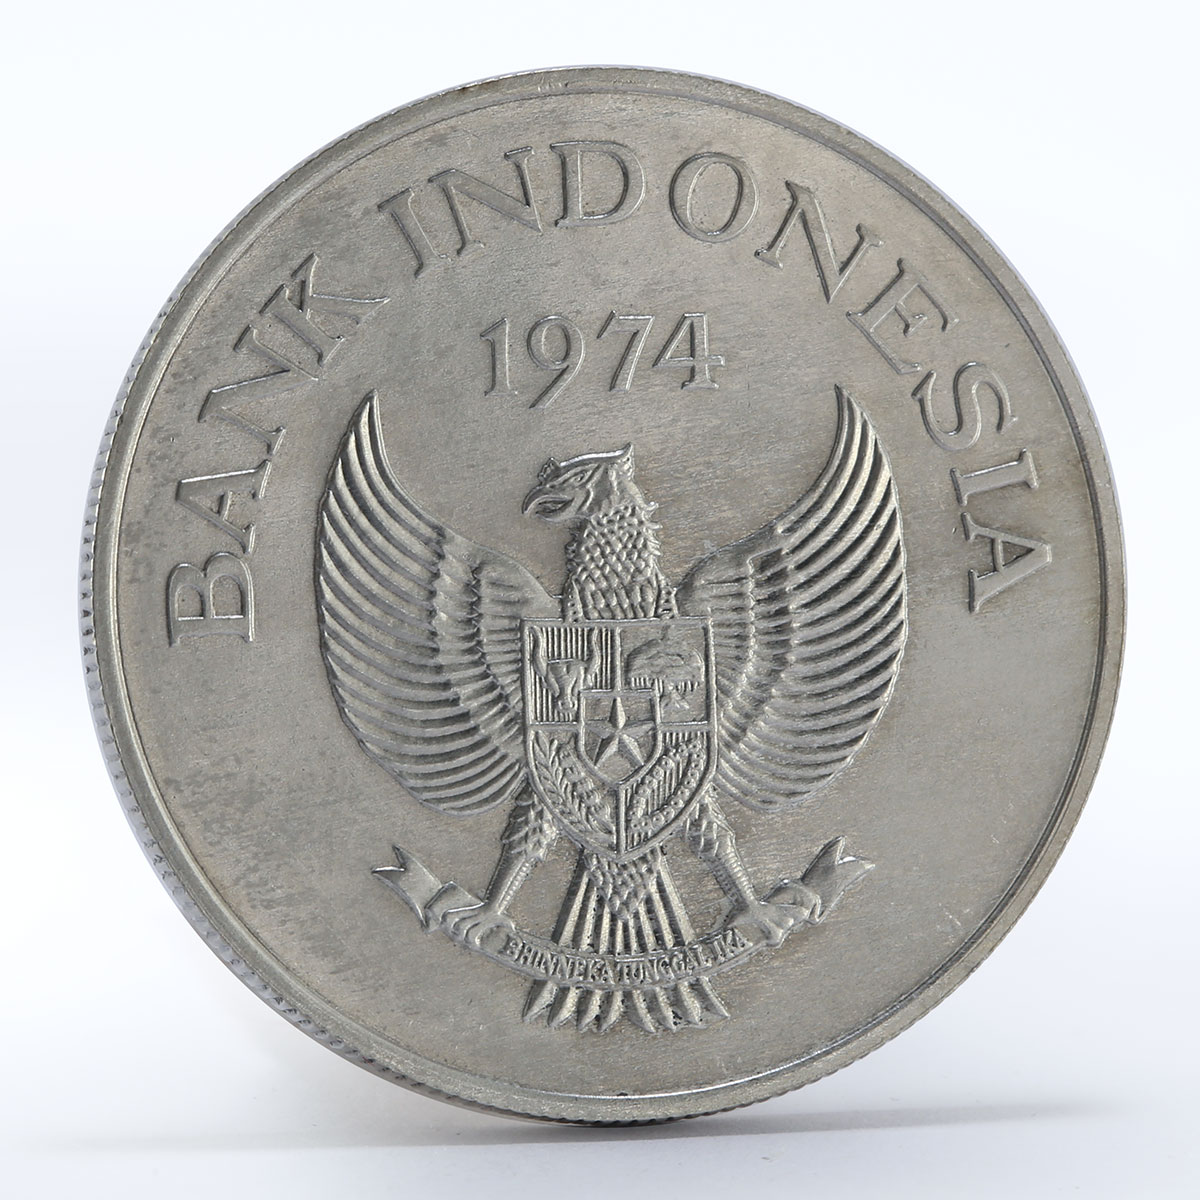 Indonesia 2000 Rupiah Javan Tiger silver coin 1974